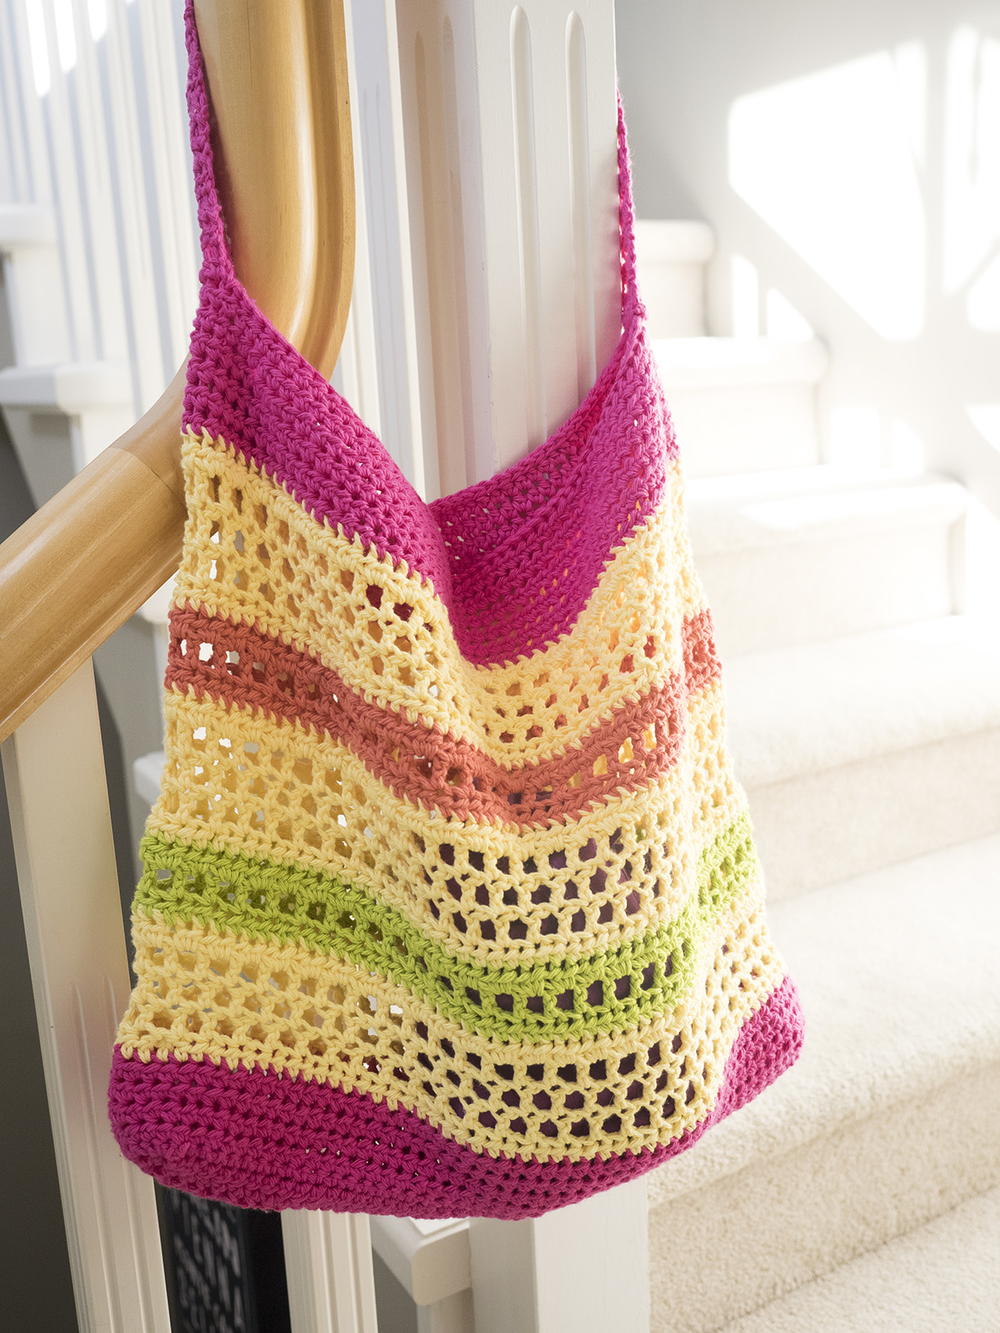 Crochet Tote Bag Free Patterns ~ 30 Easy Crochet Tote Bag Patterns ...